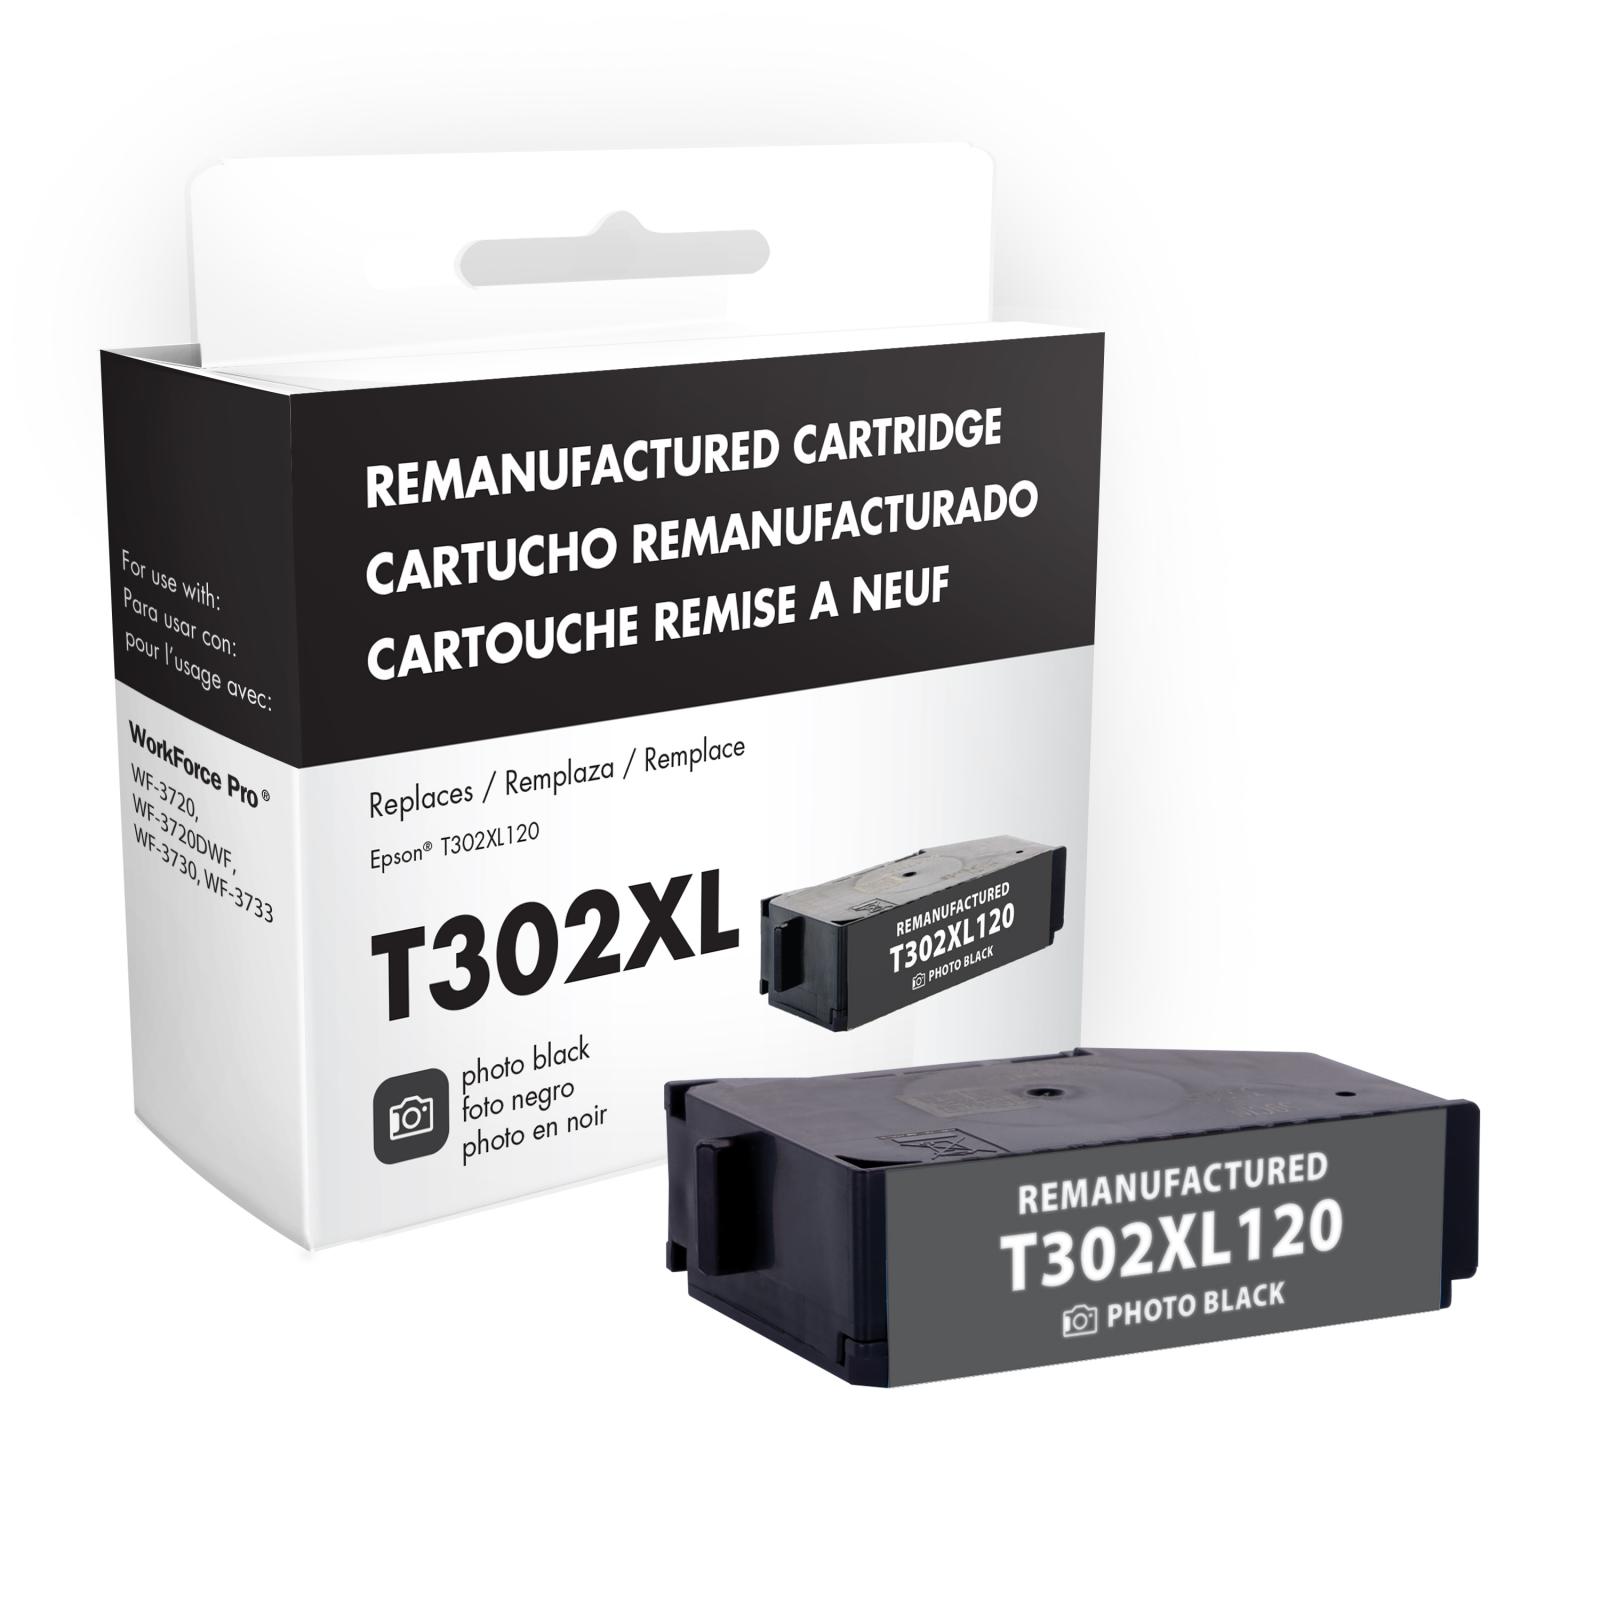 Epson T302XL120 PHOTO BLACK Compatible inkjet for XP-6100 XP-6000